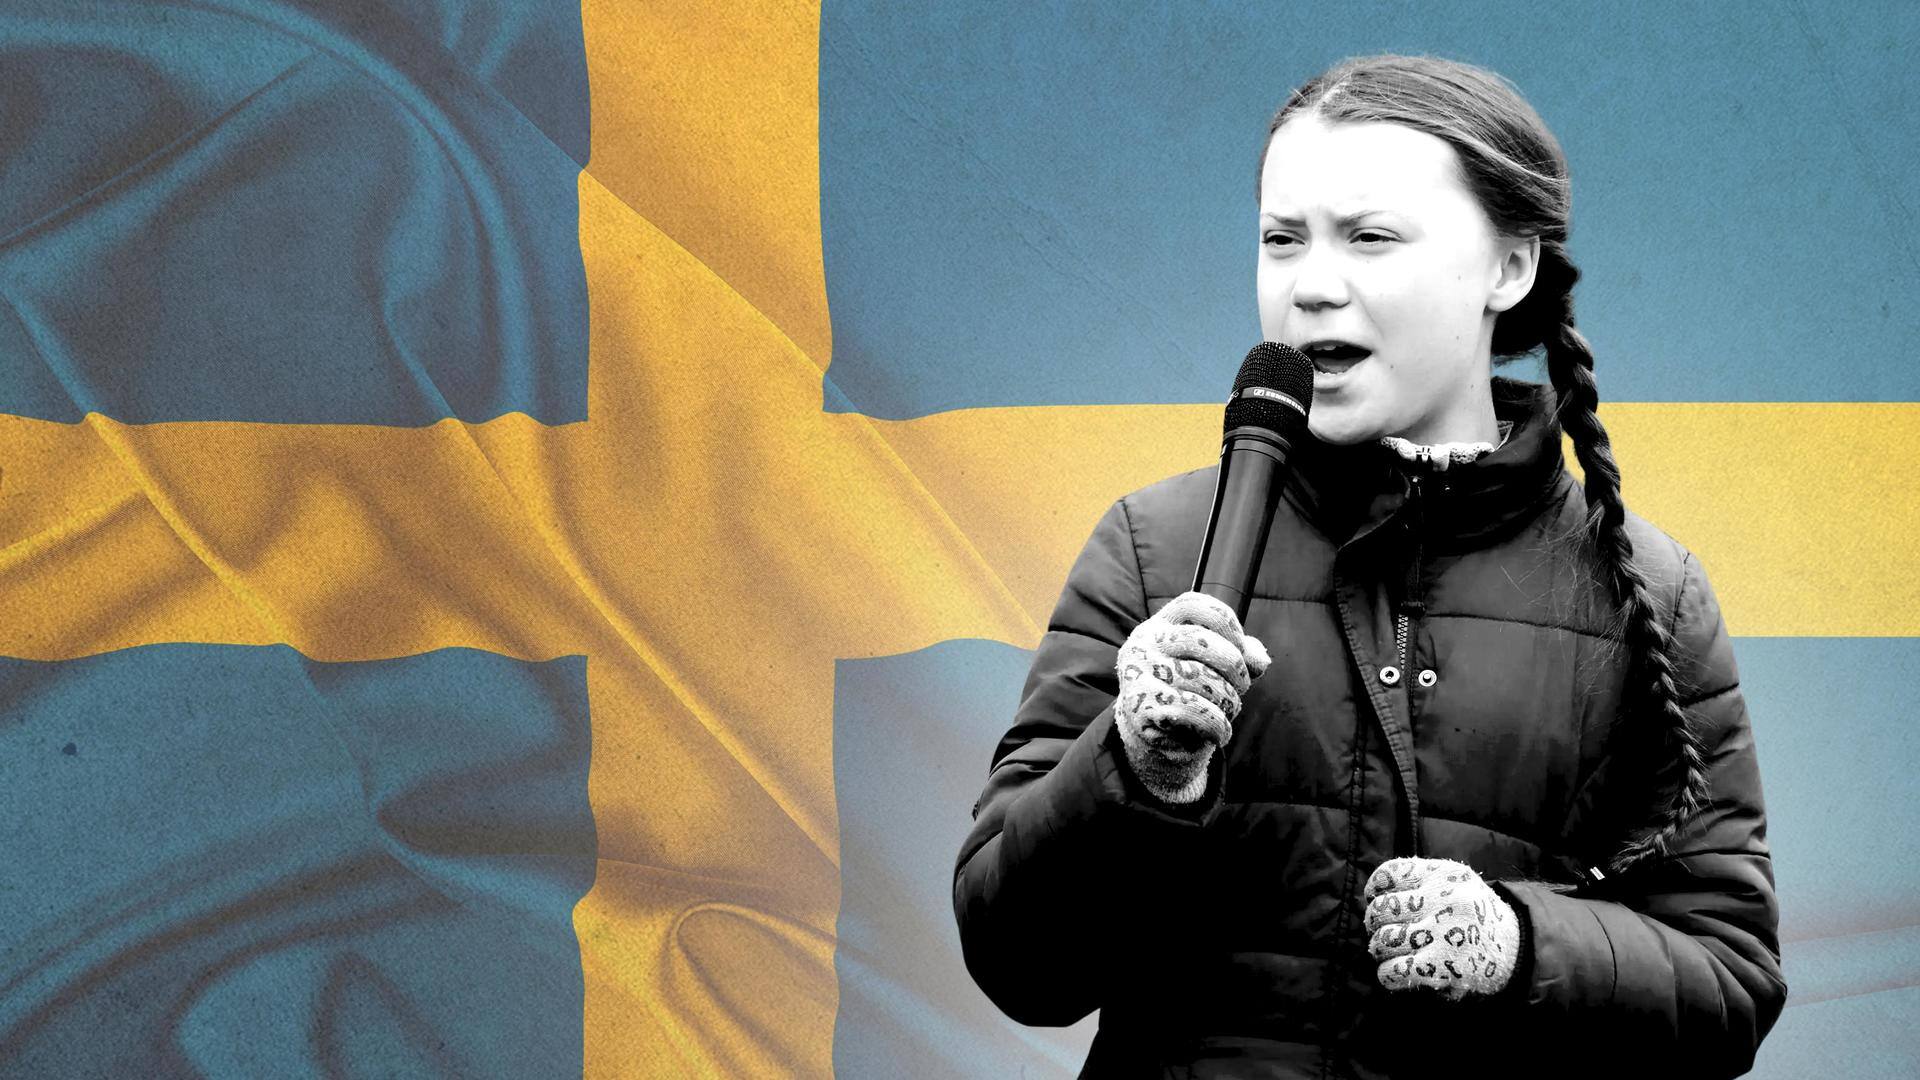 Activist Greta Thunberg sues Sweden for 'failing on climate'